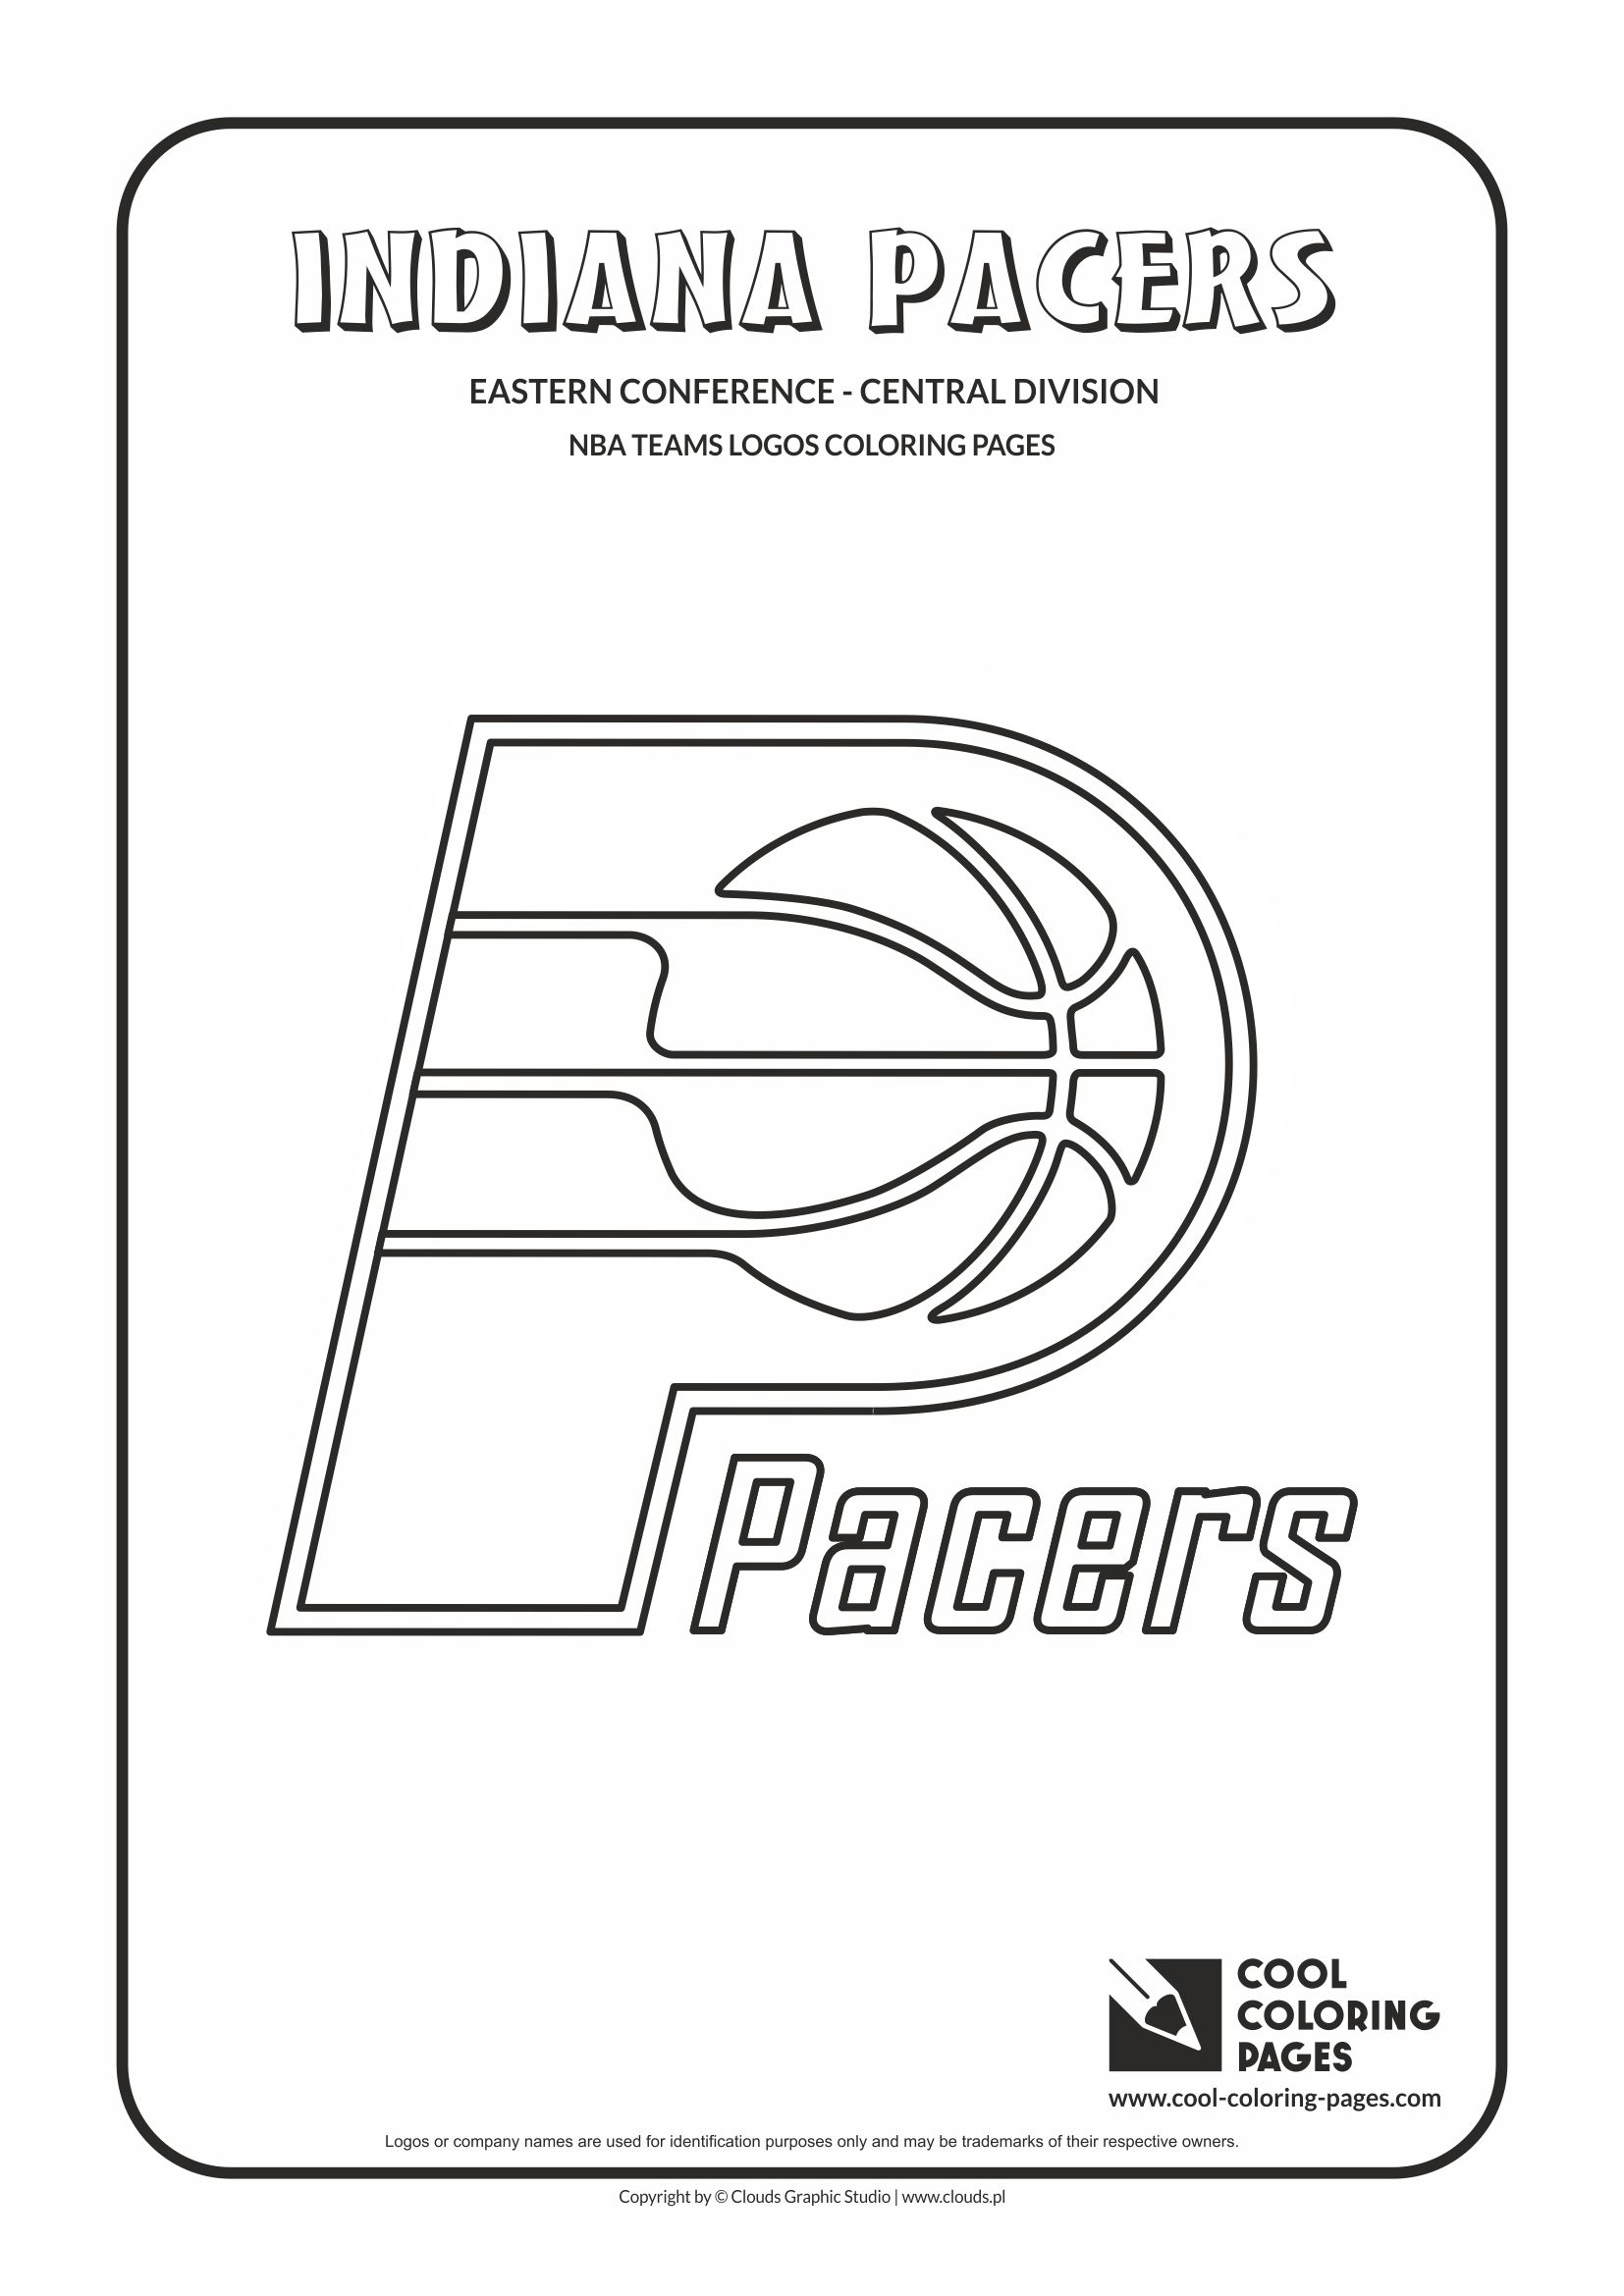 NBA logos coloring pages printable games